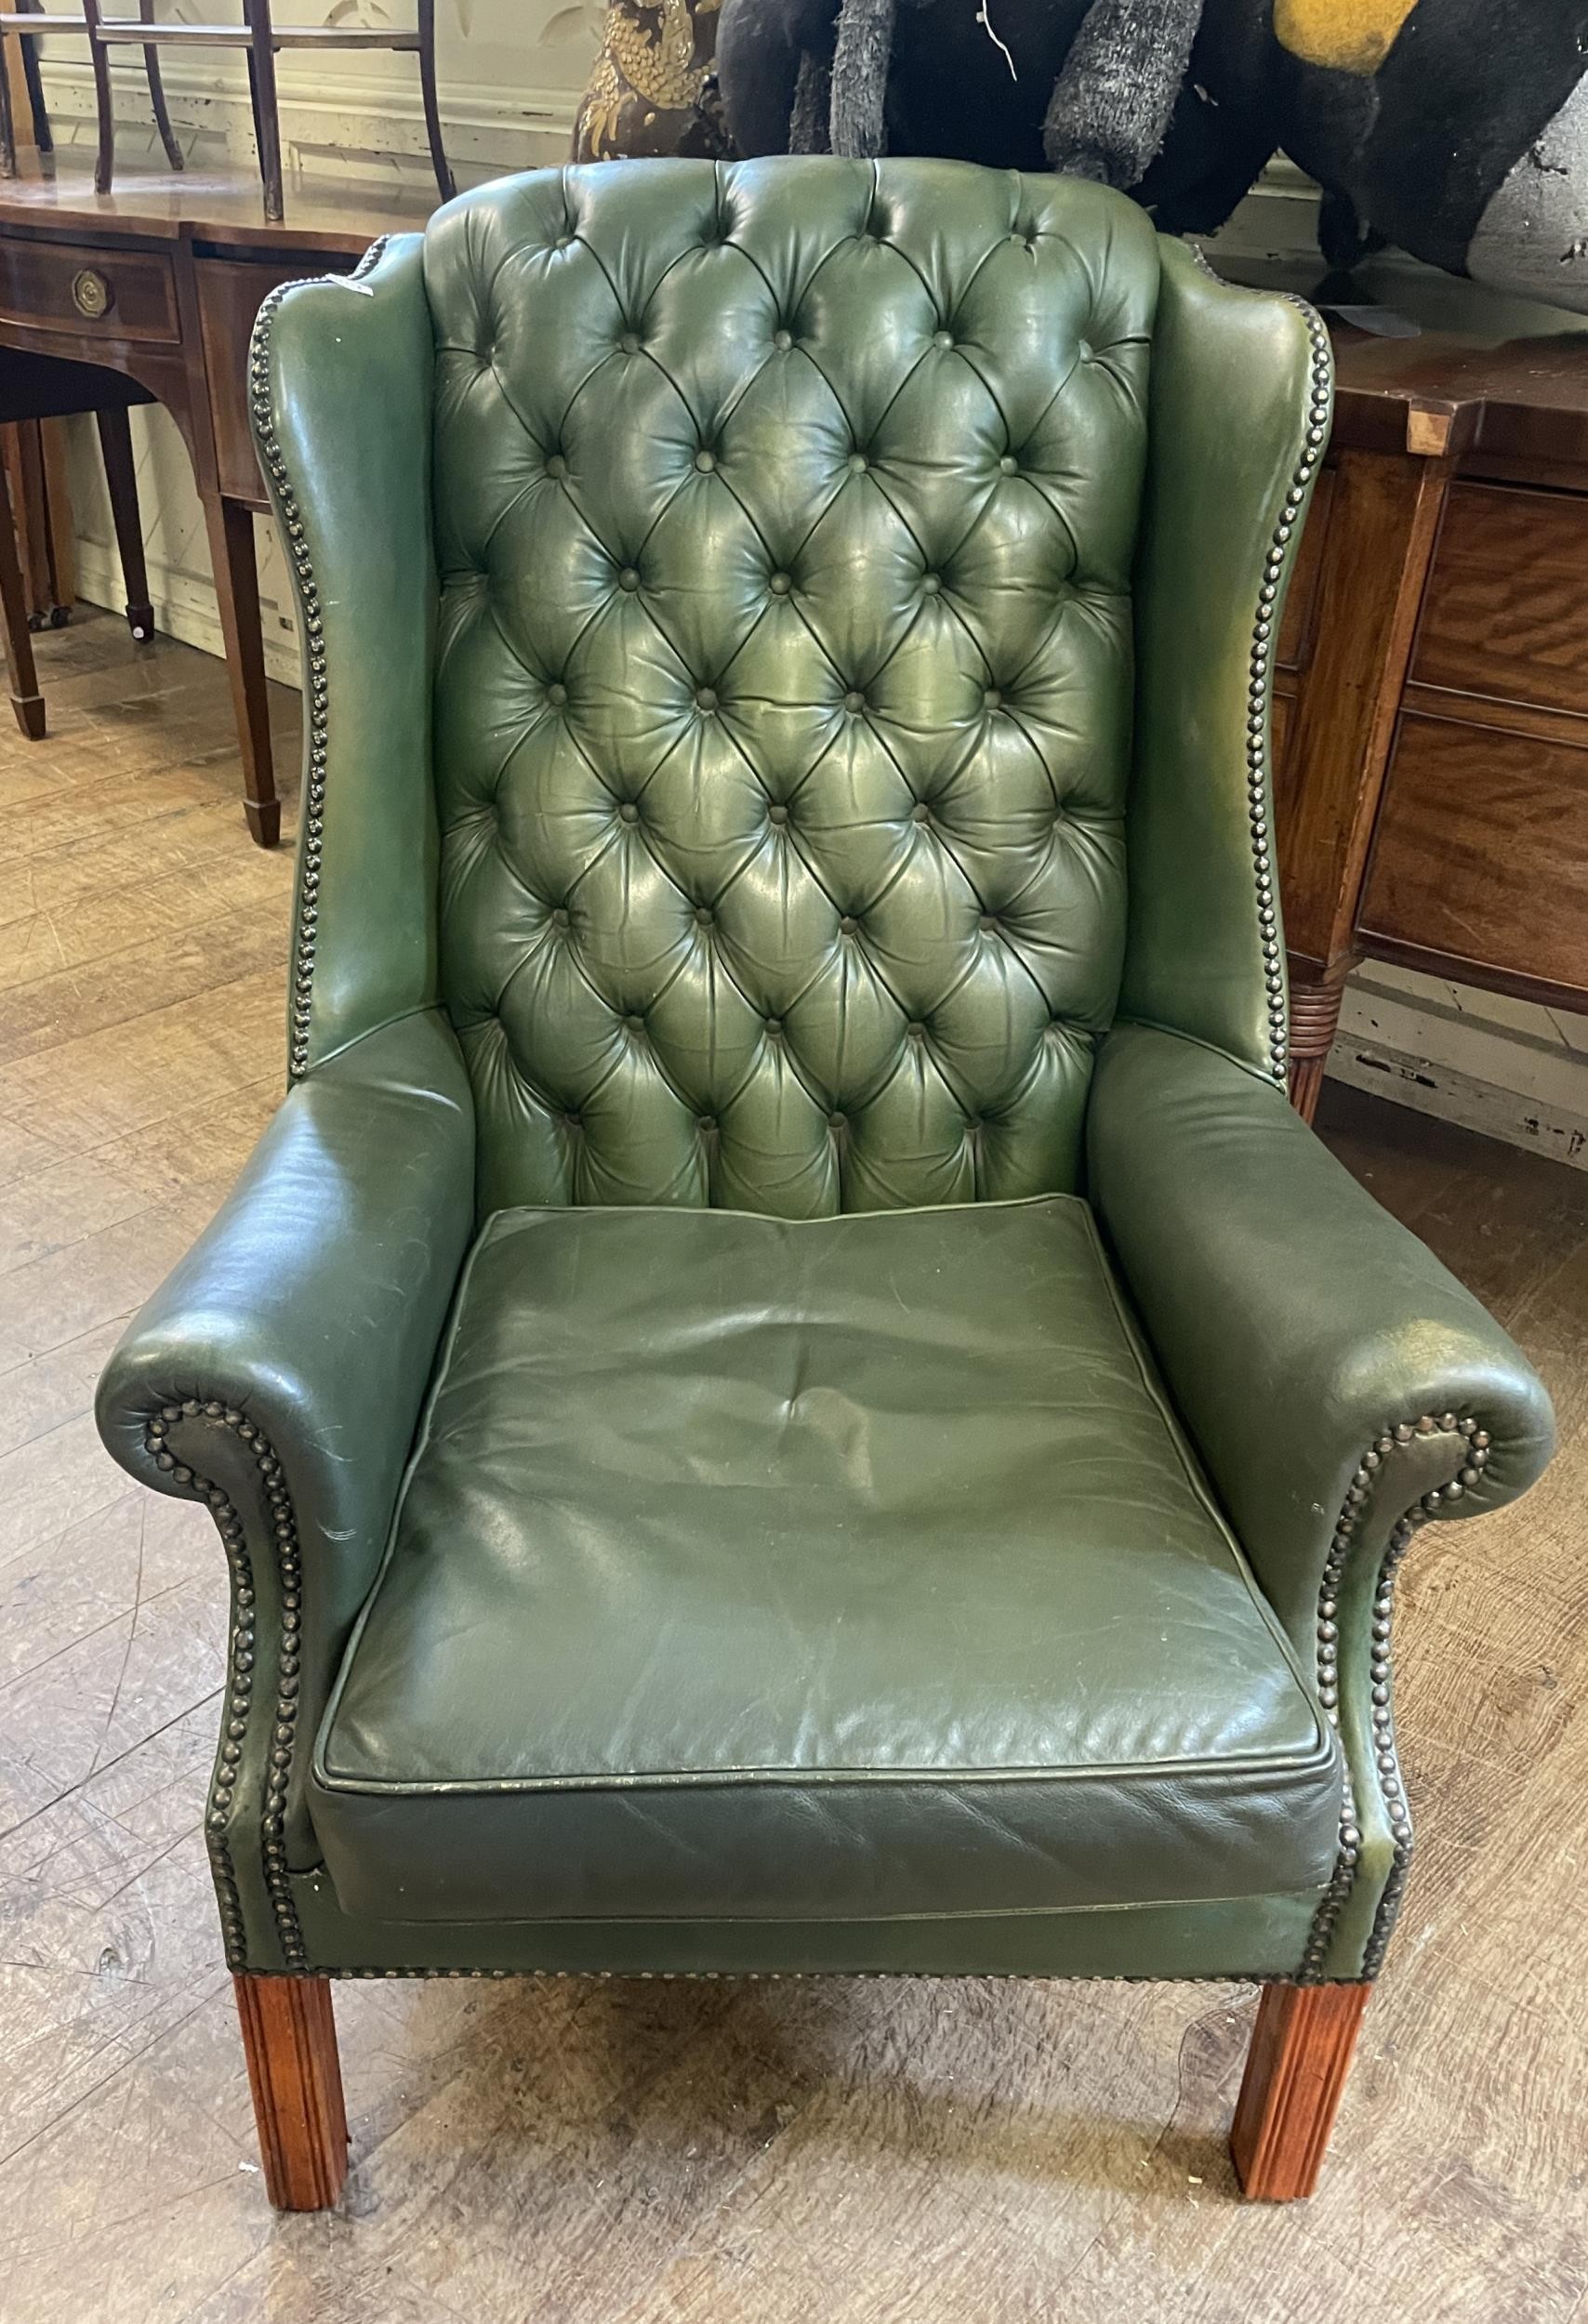 A green wingback button armchair